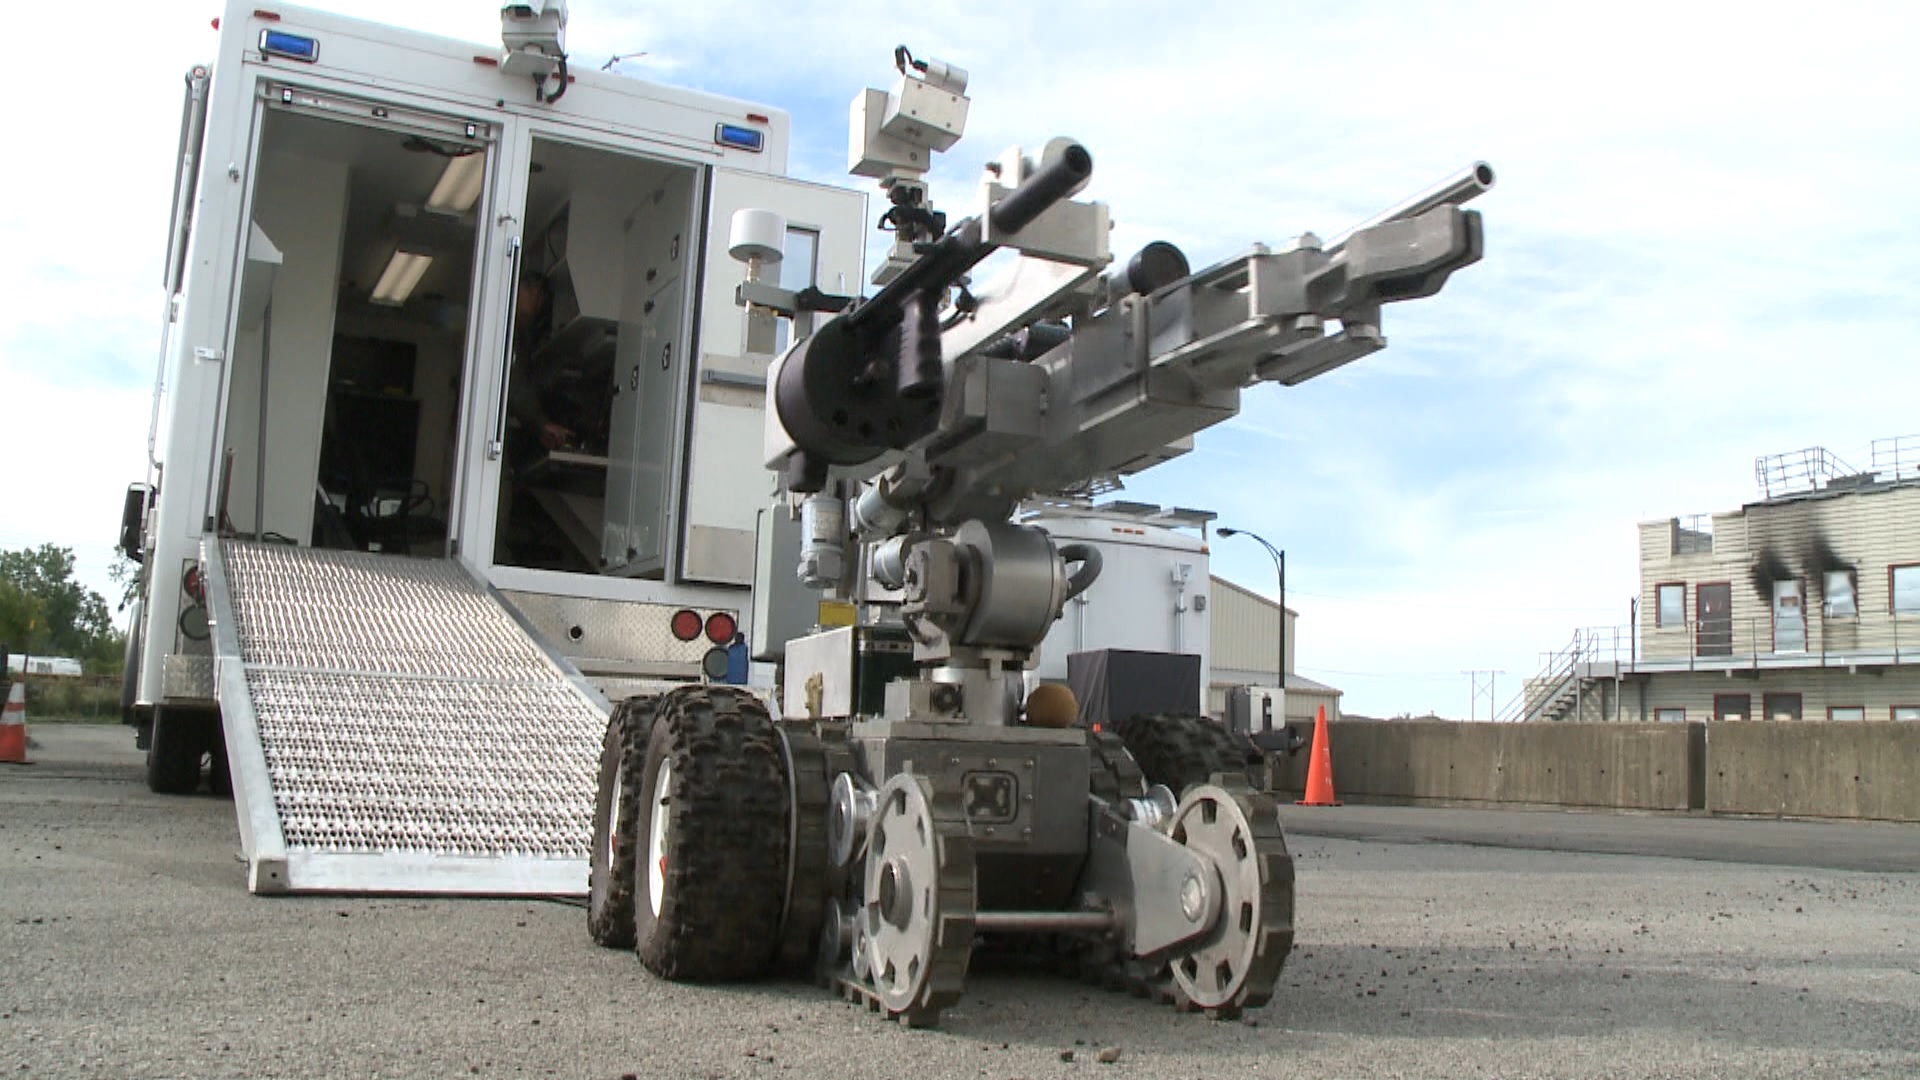 Bomb squad unit shows off robots | wgrz.com